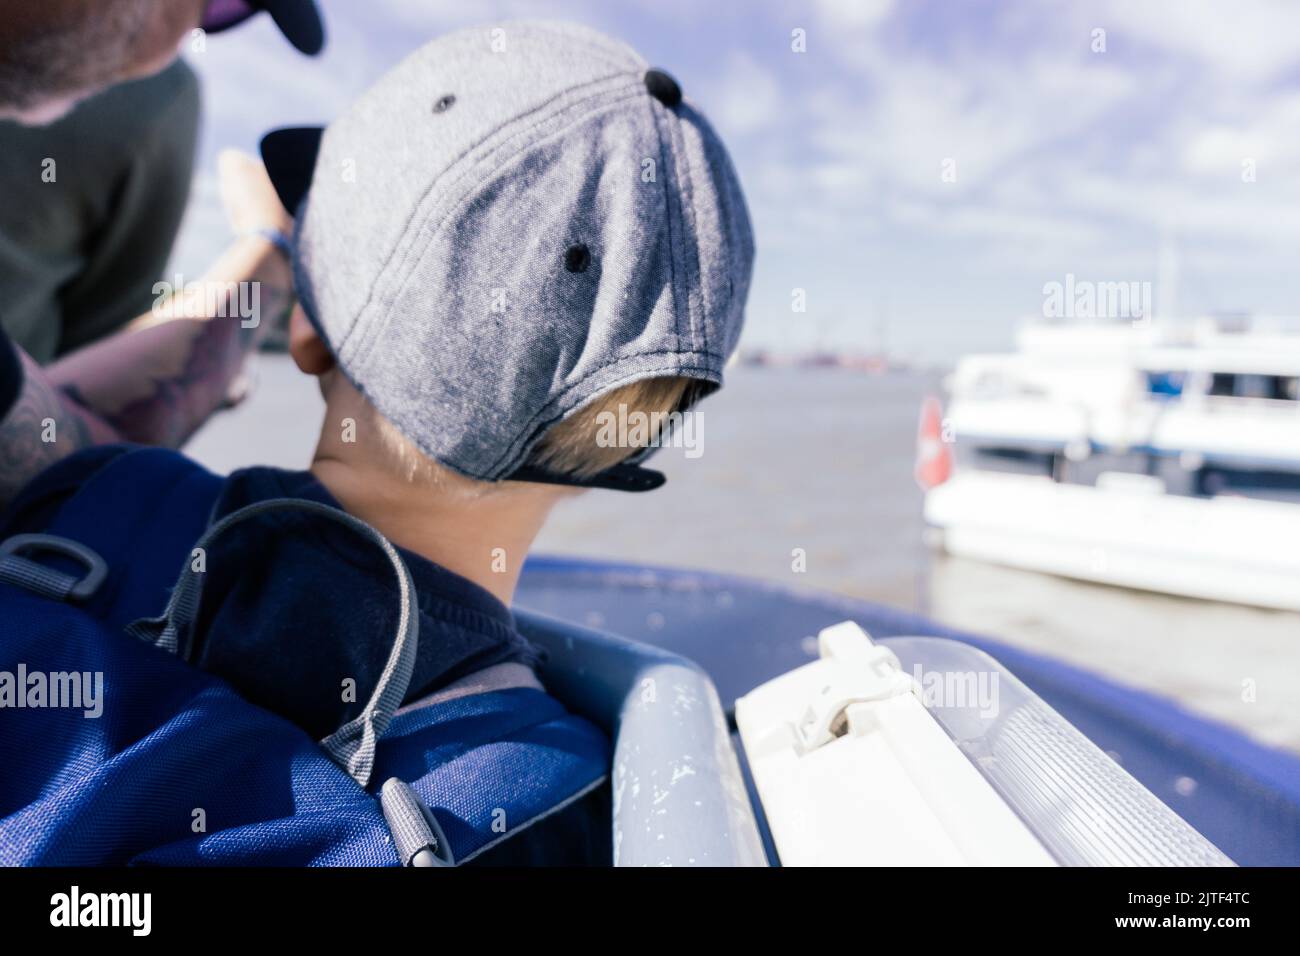 Man showing child something on horizon during boat ride Stock Photo